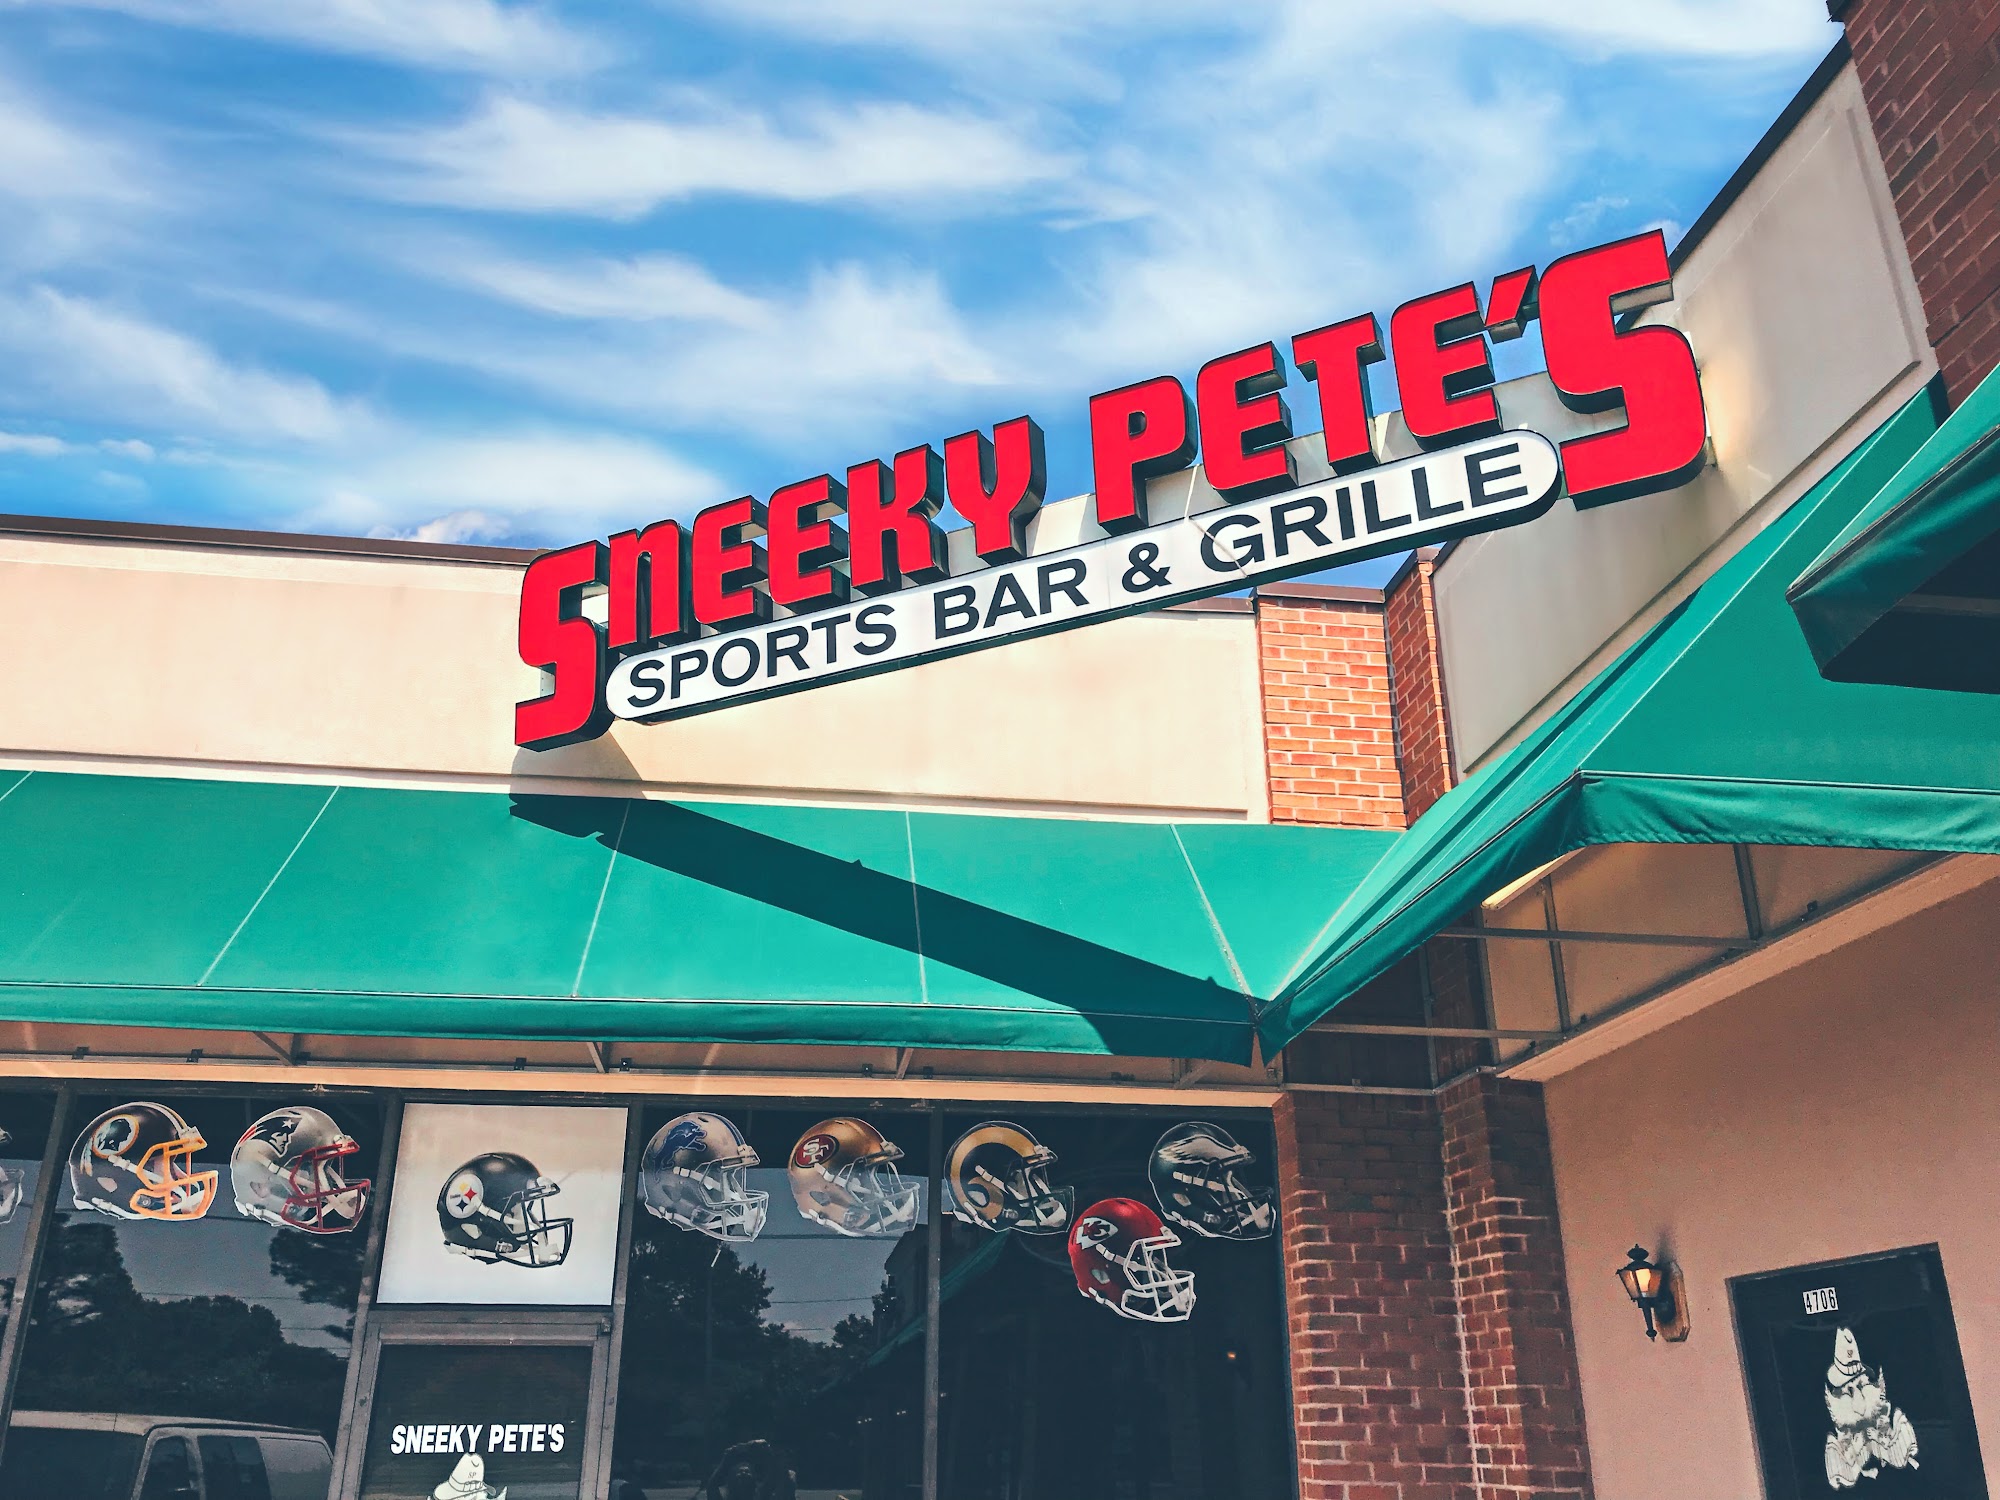 Sneeky Pete's